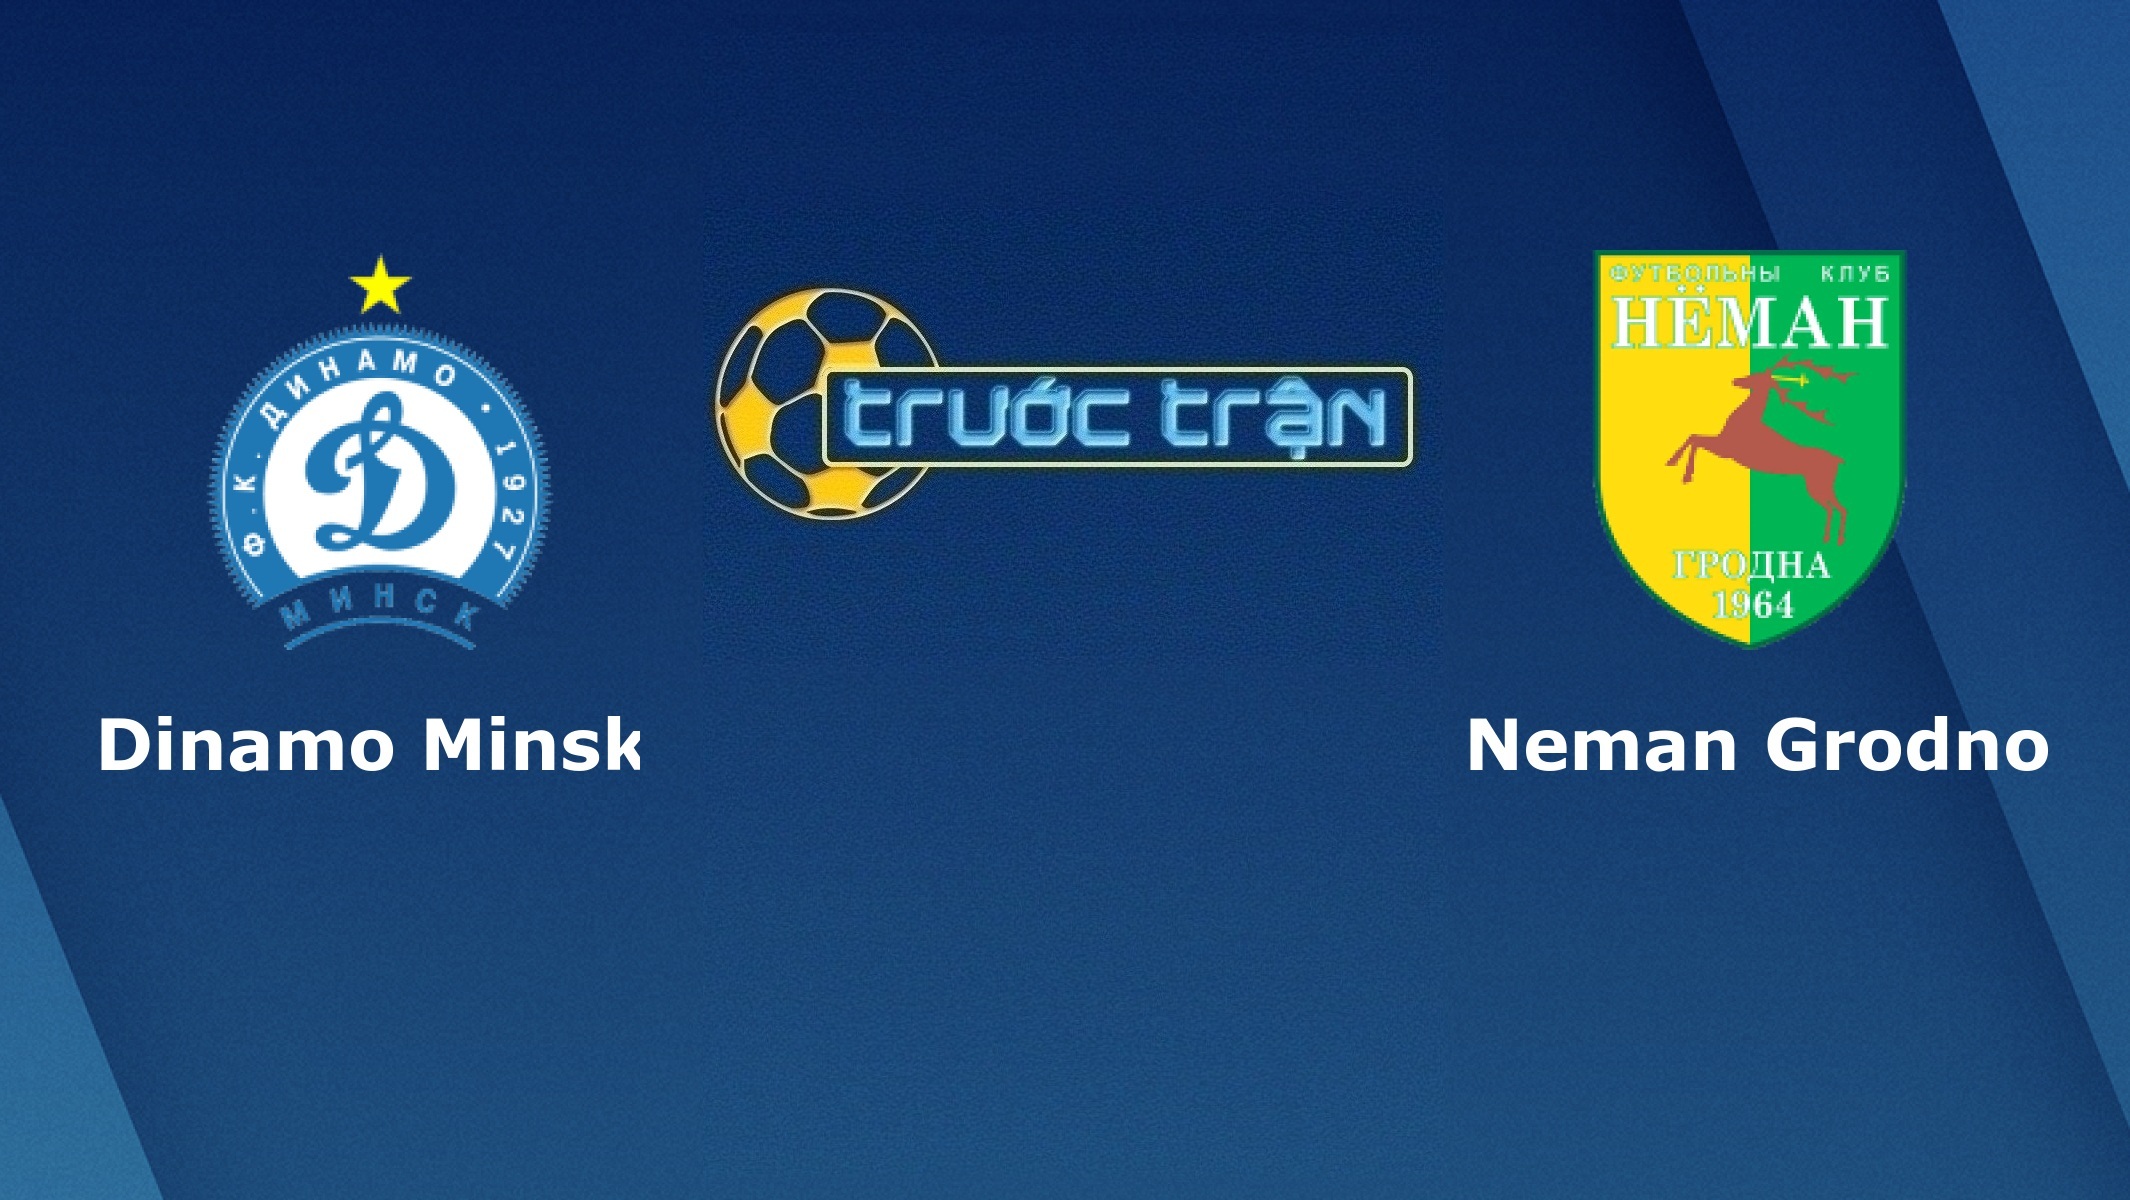 Dinamo Minsk vs Neman Grodno – Tip kèo bóng đá hôm nay – 16/04